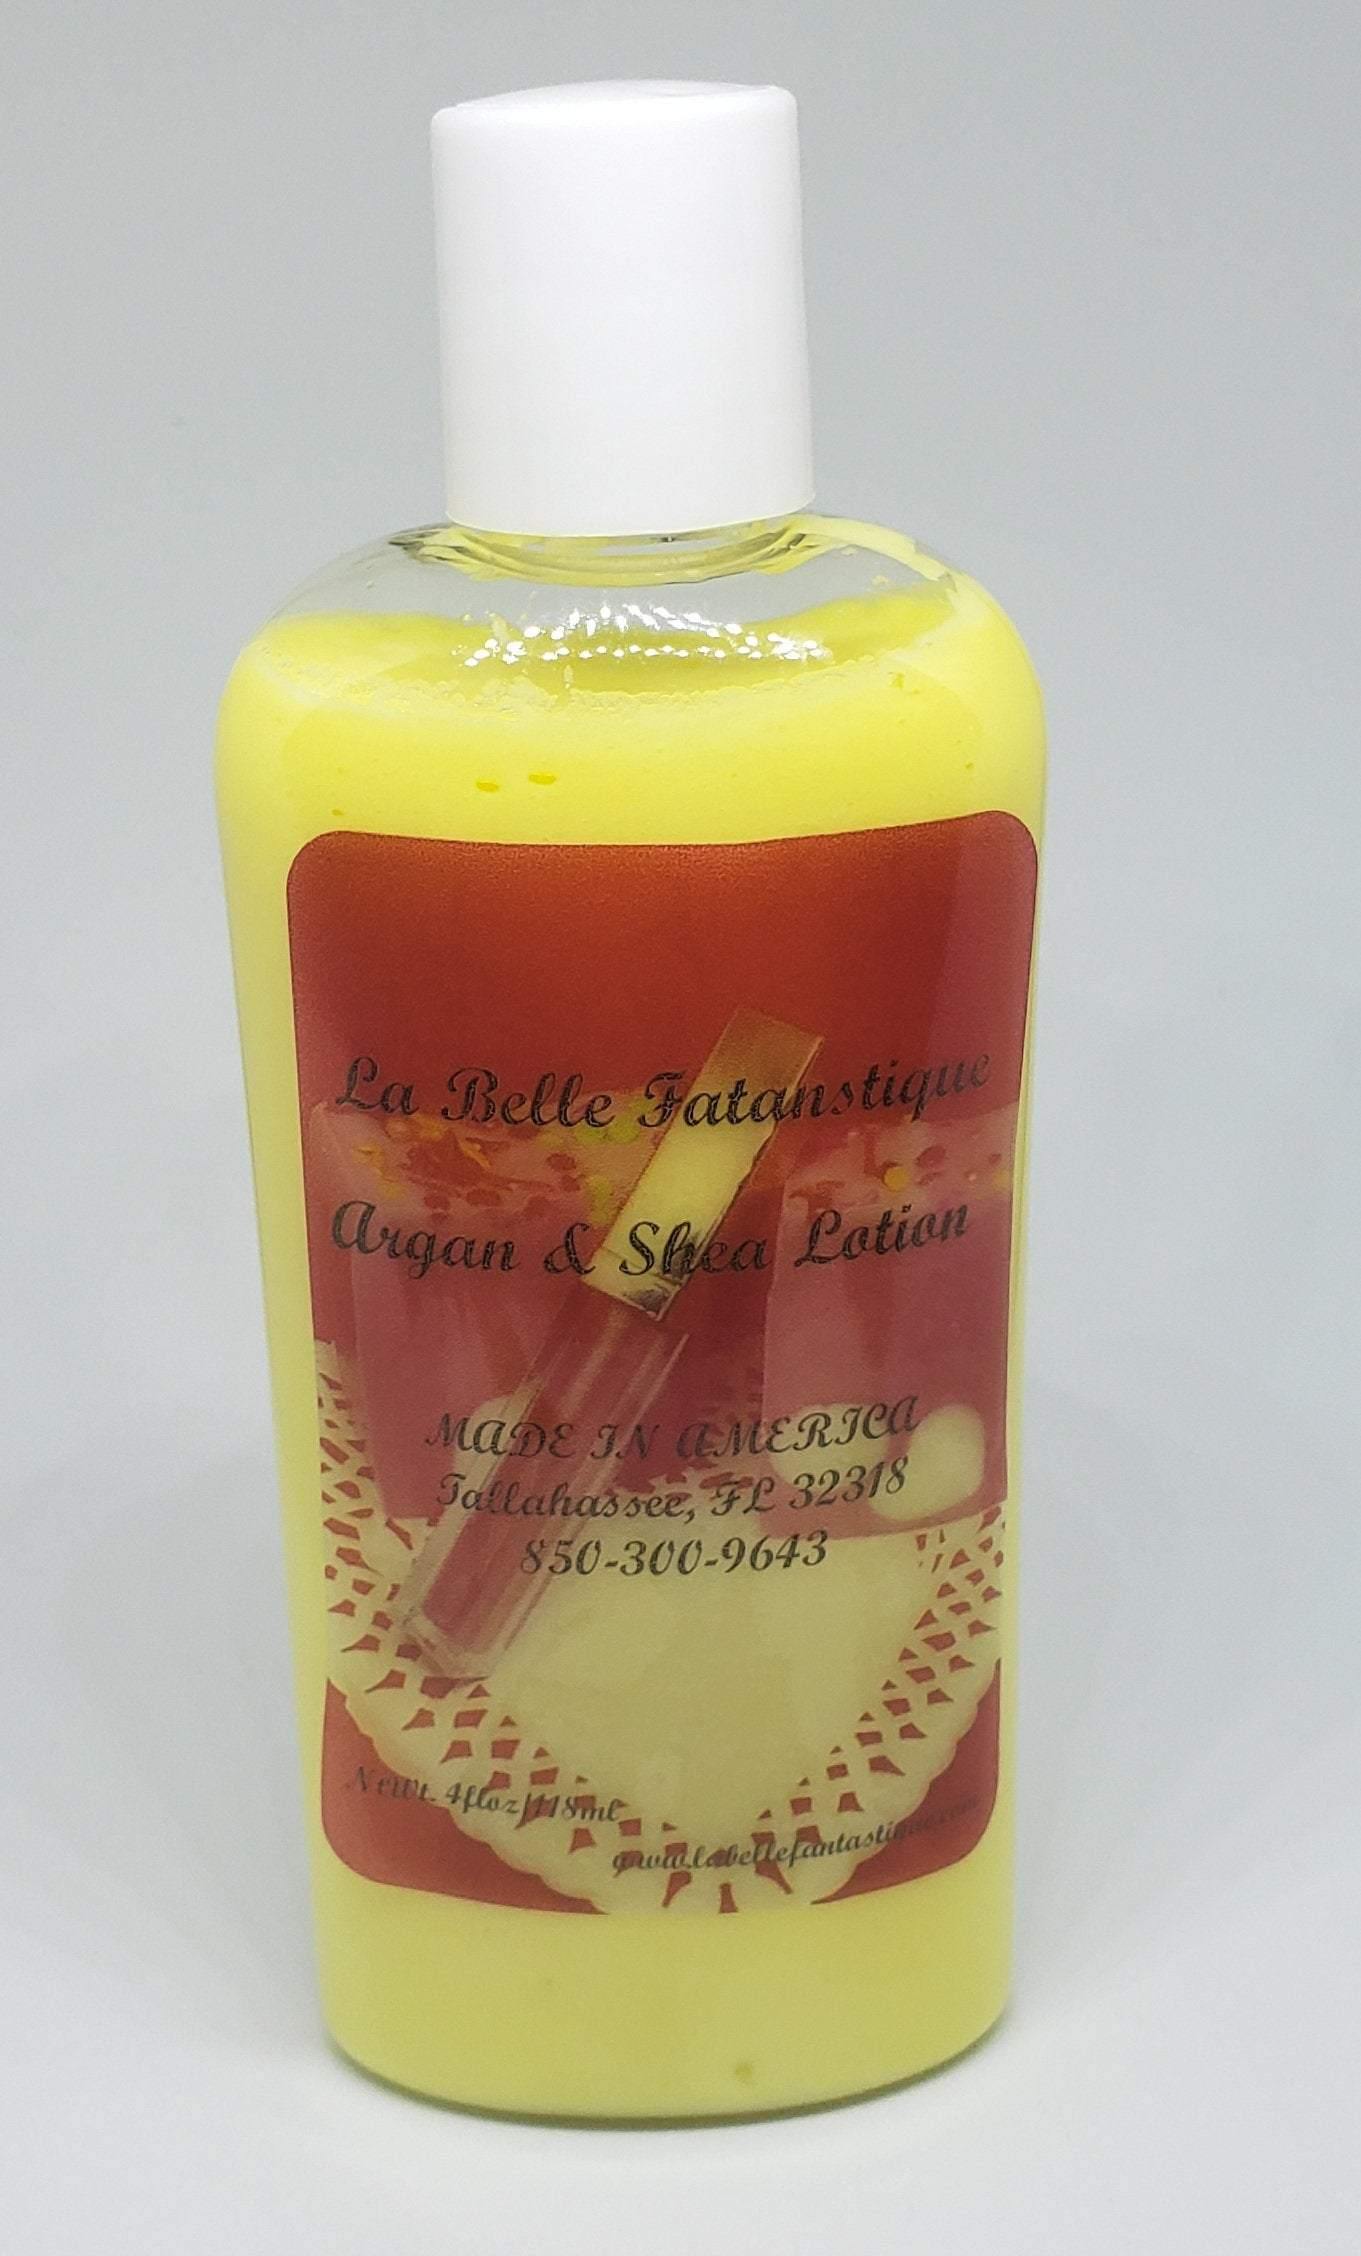 Argan oil & Shea Butter Lotion